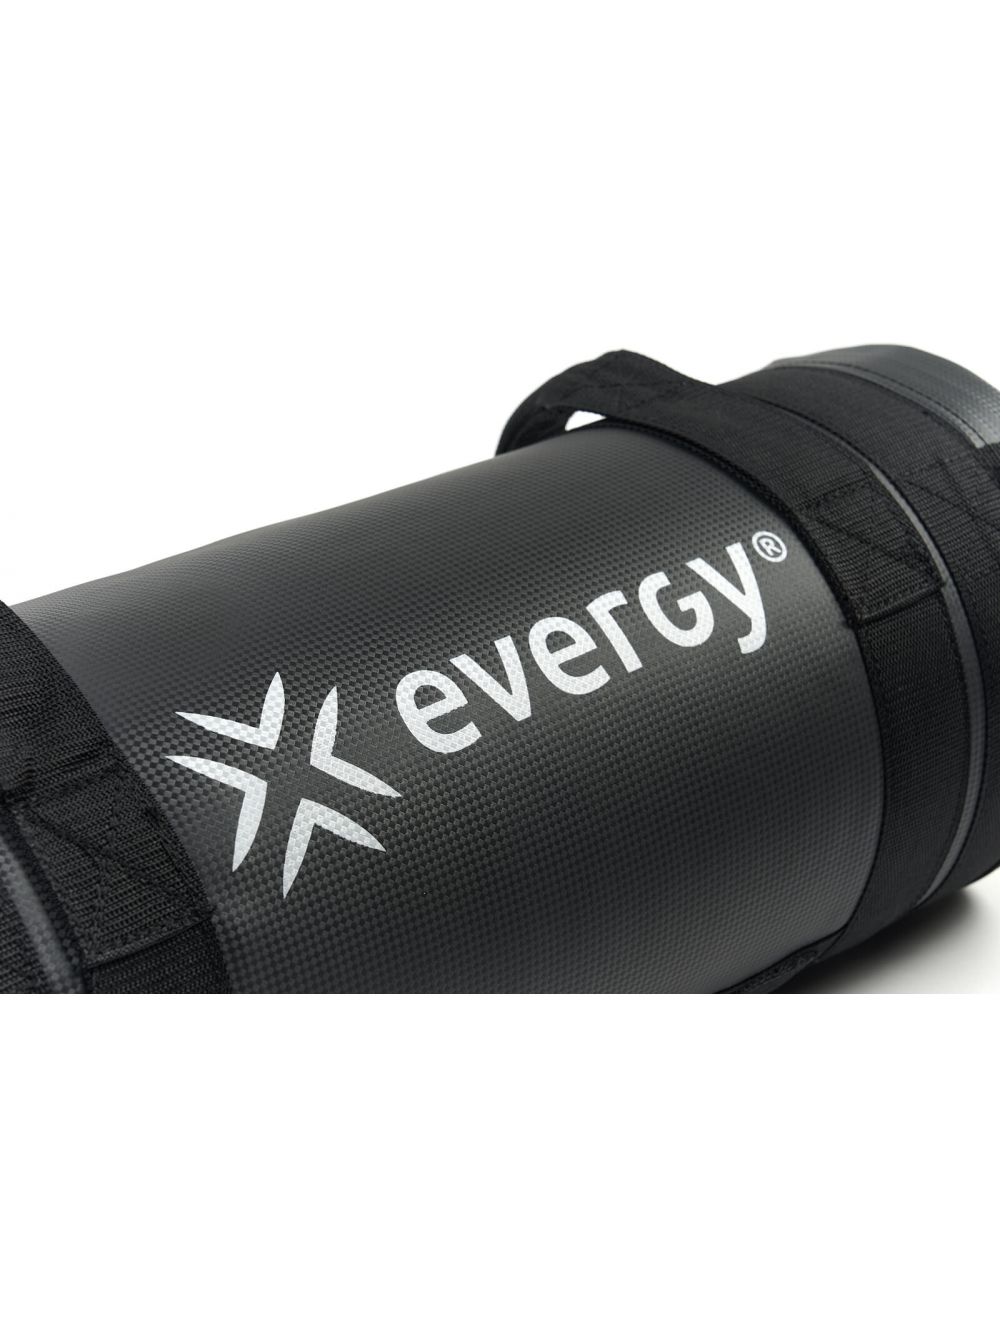 Functional Bag Elite Evergy - Sportech fitness